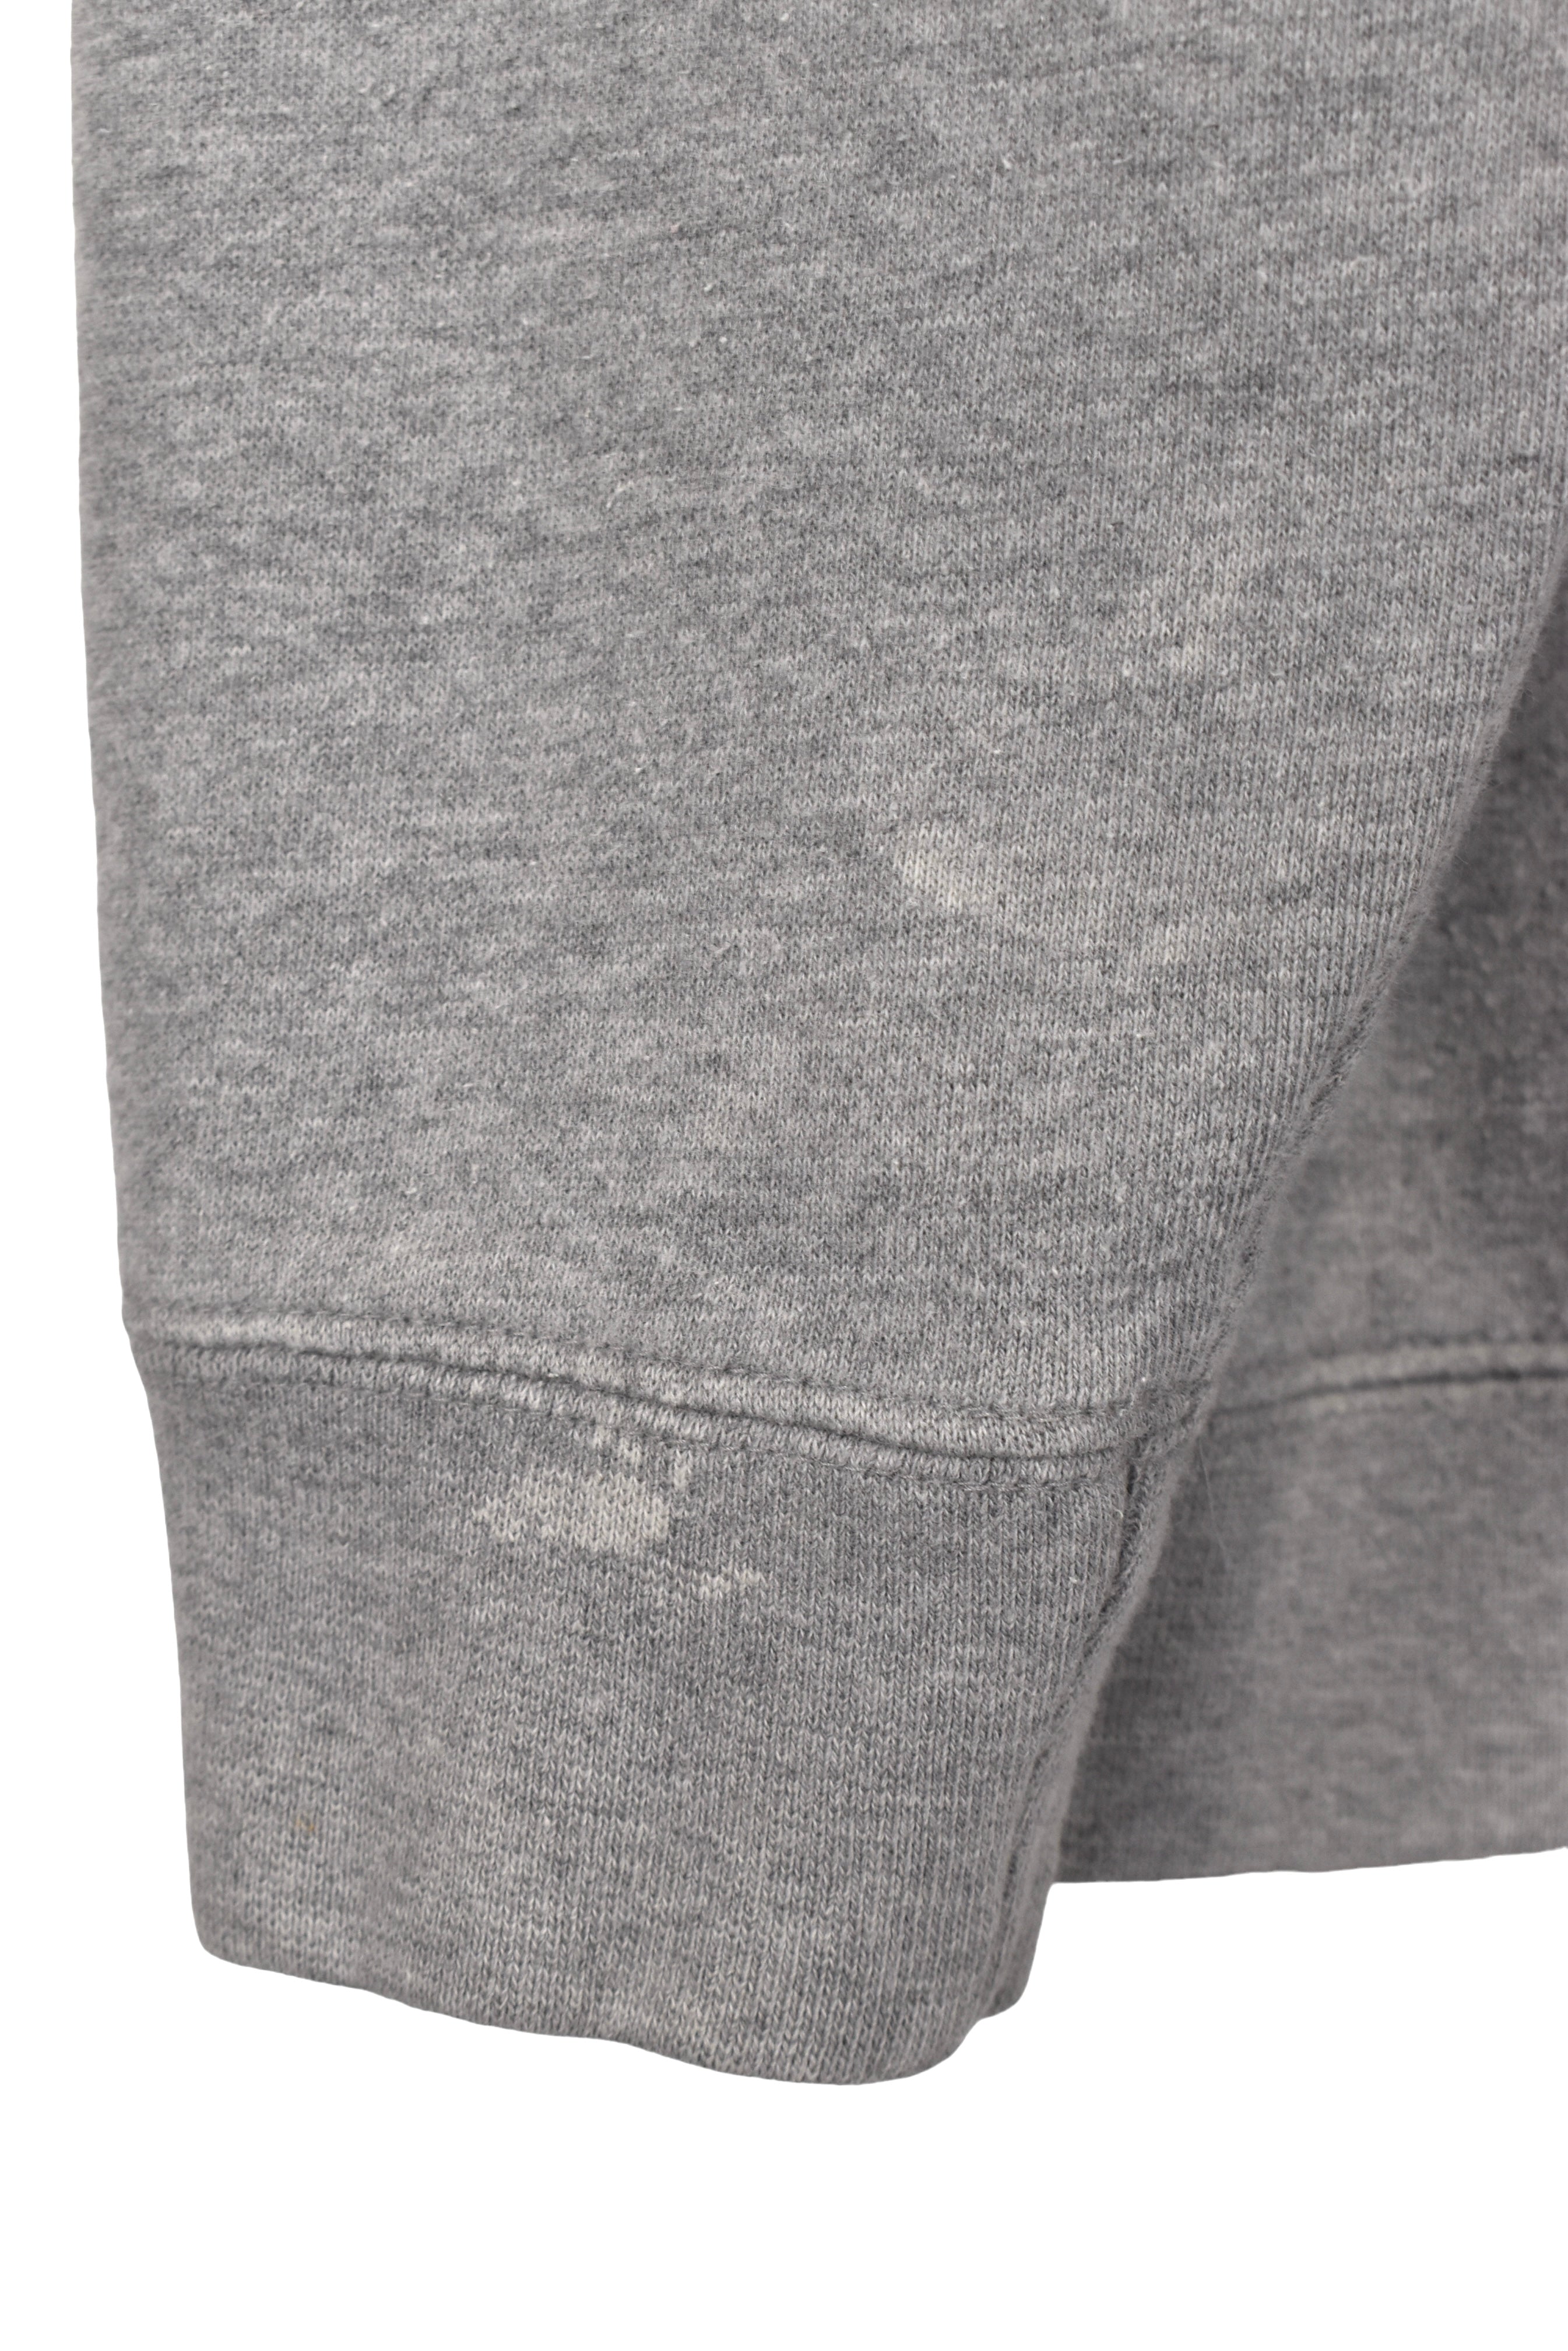 Vintage Timberland sweatshirt, grey embroidered crewneck - Large